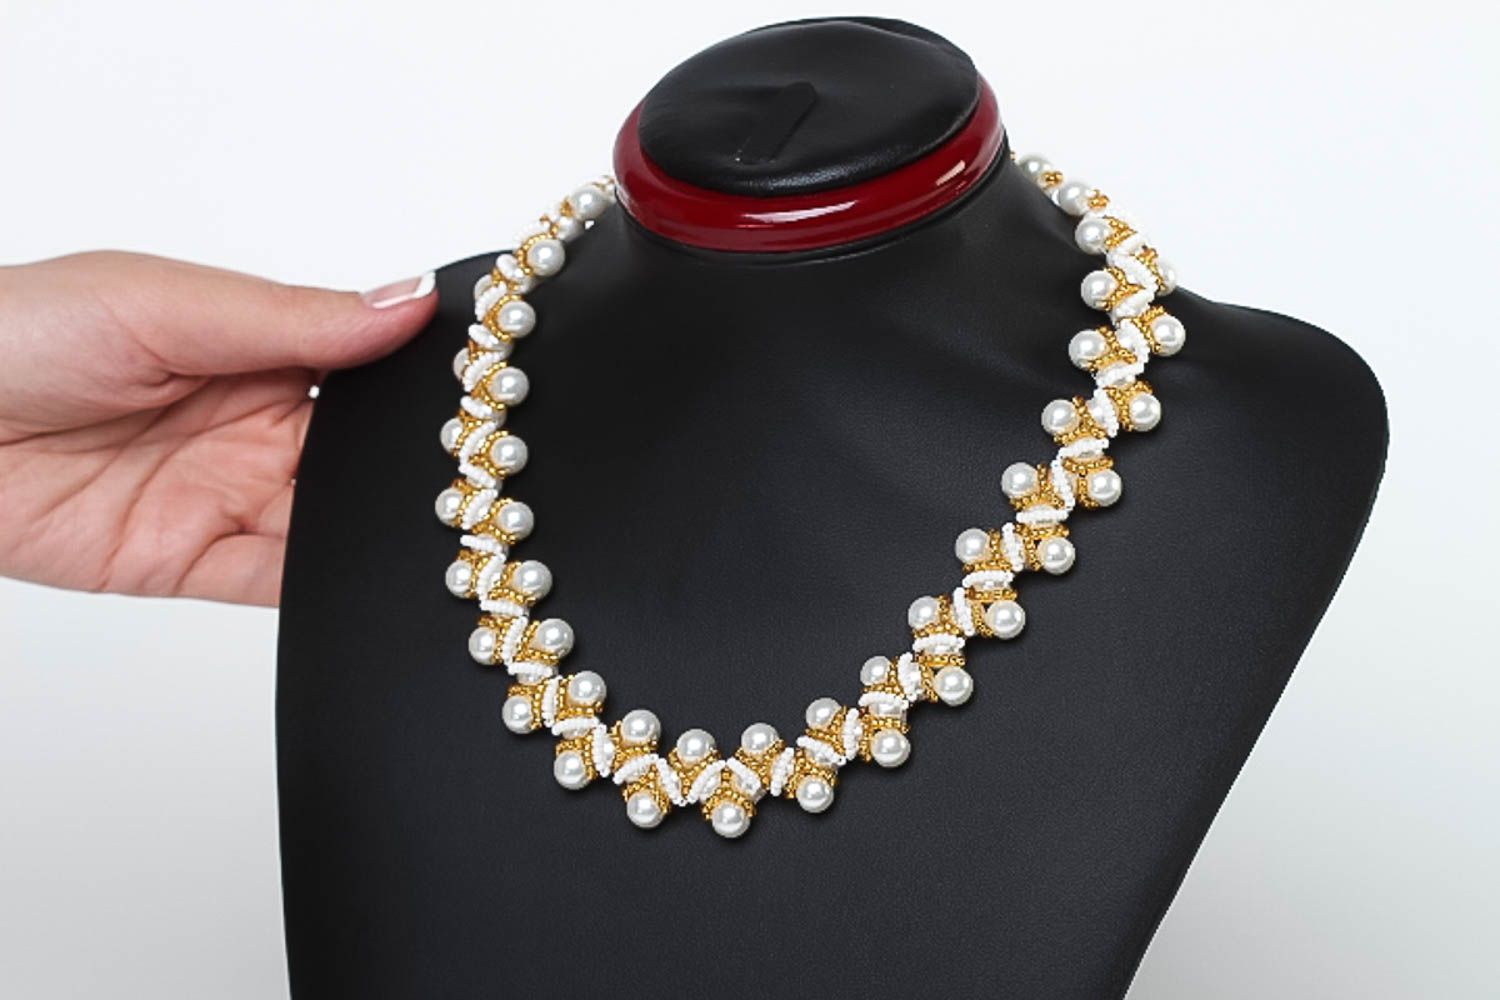 Beautiful handmade beaded necklace artisan jewelry designs bead weaving ideas photo 5